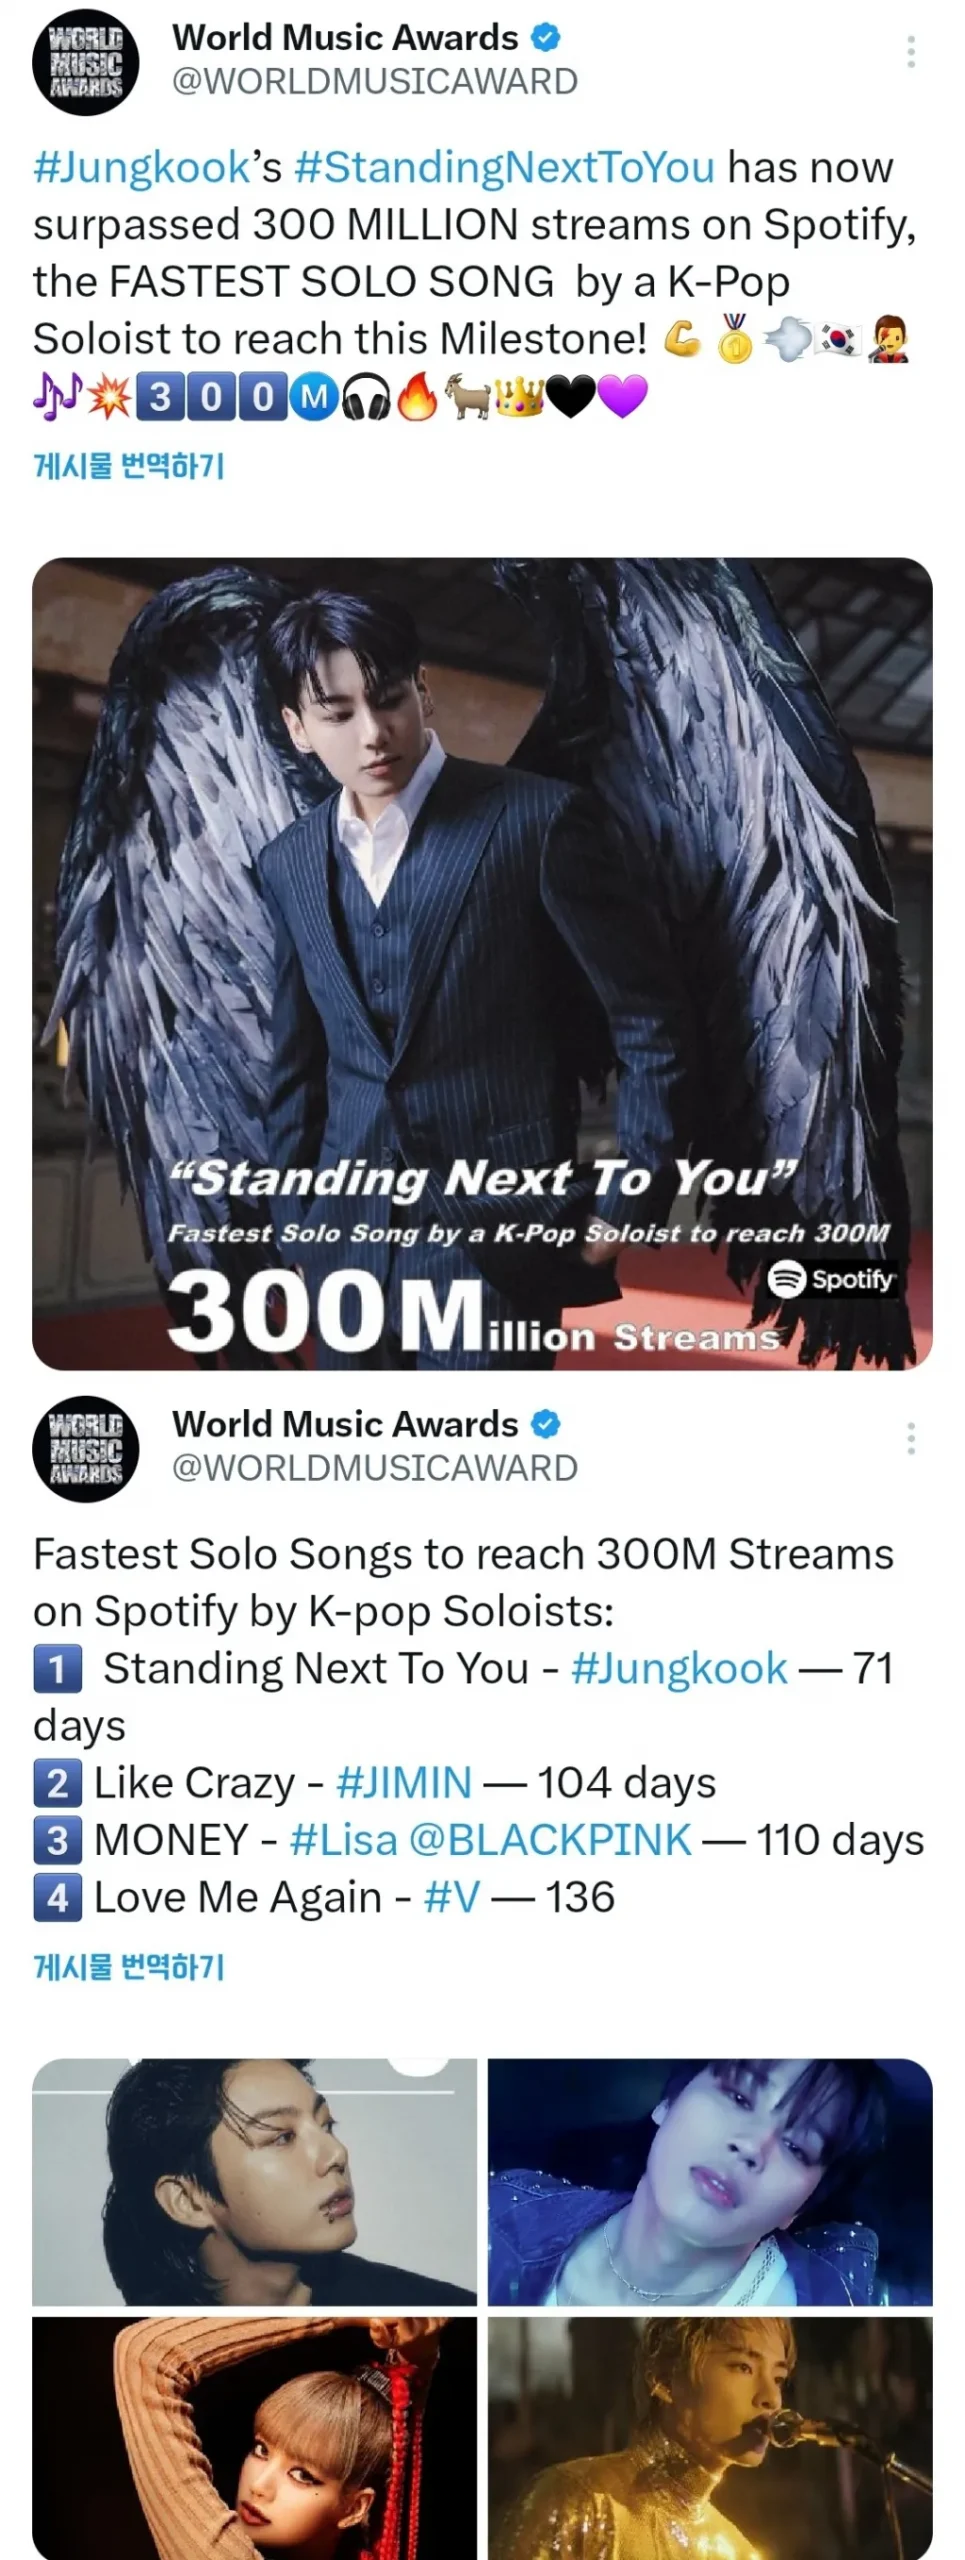 BTS ジョングク「Standing Next to You」 Spotify が 3 億セールスを突破…リリースからわずか 71 日で「K-POP ソロ アーティストとしては最速」